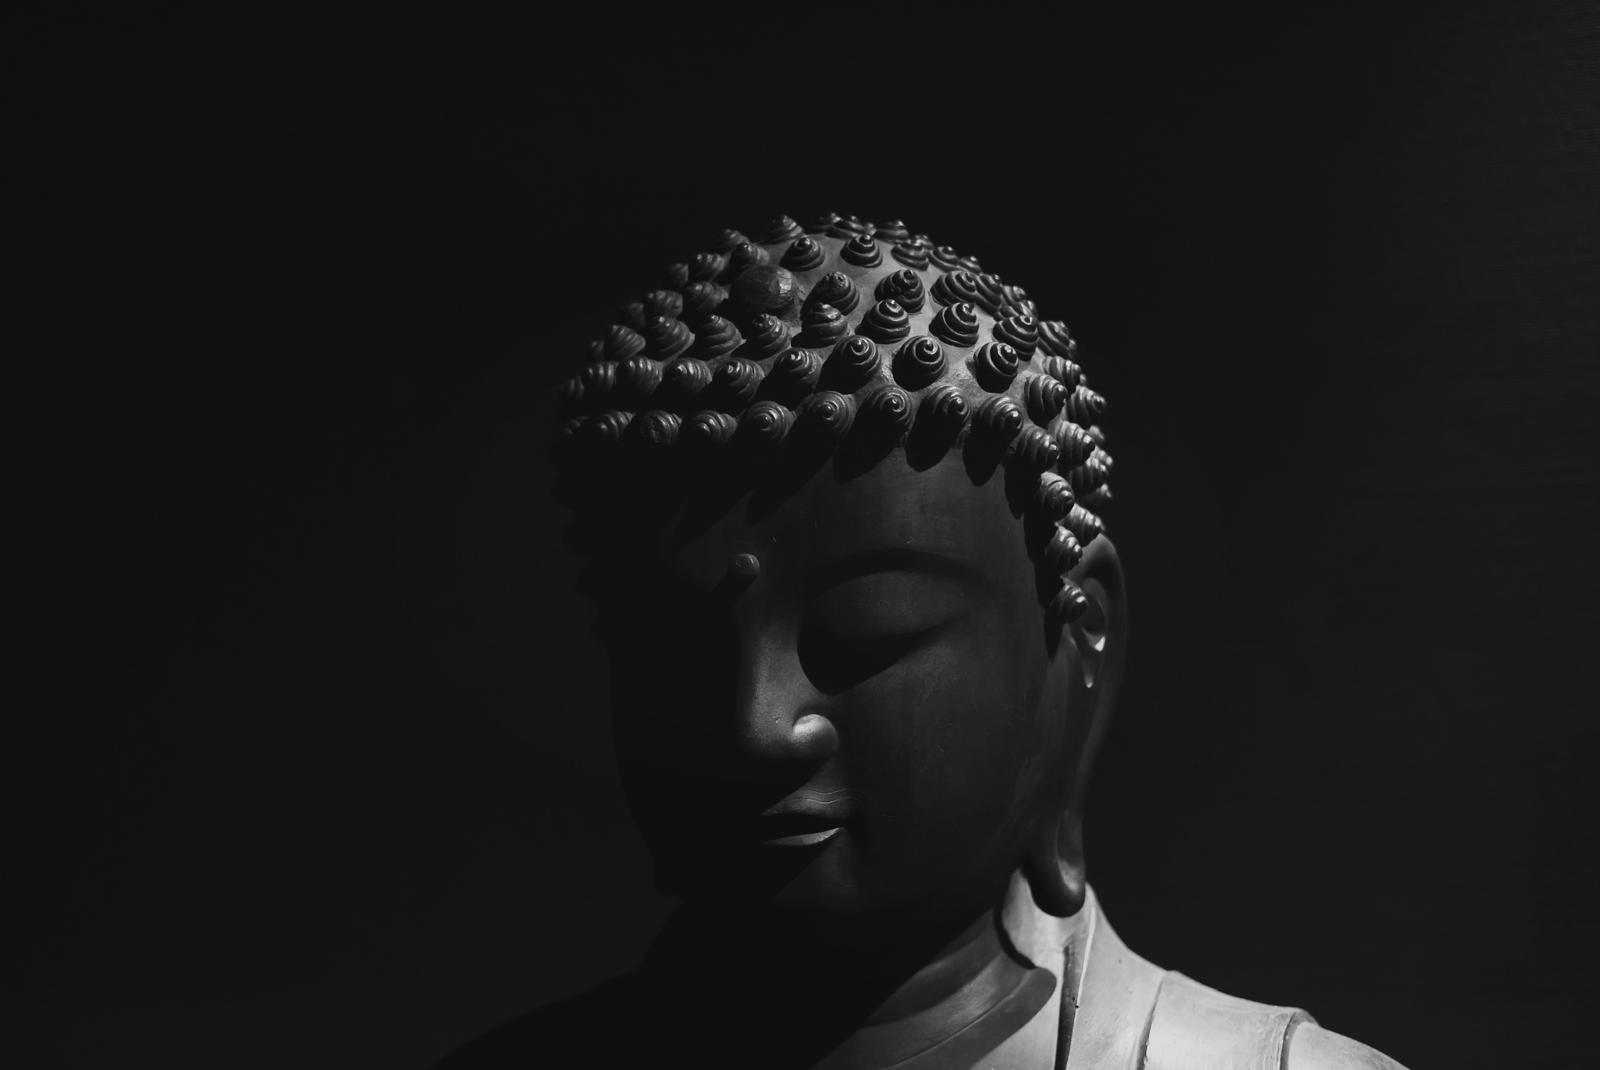 Boeddha in Boeddha-zaal in het Wereldmuseum, Leiden Foto: David